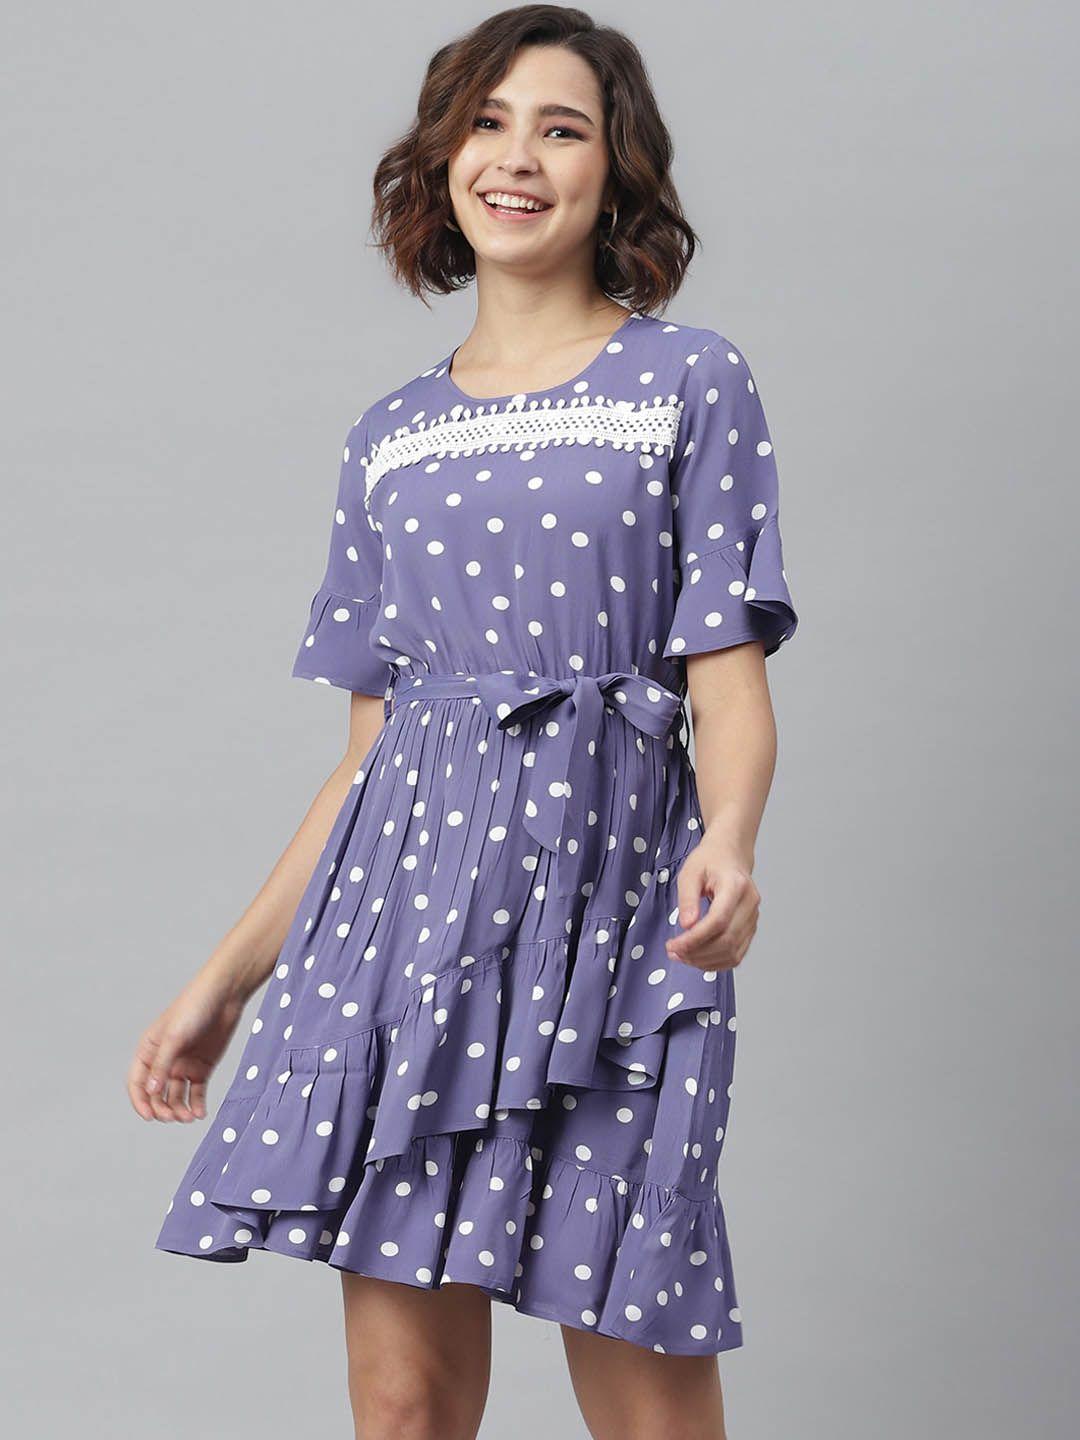 stylestone women lavender & white polka dot printed fit and flare dress